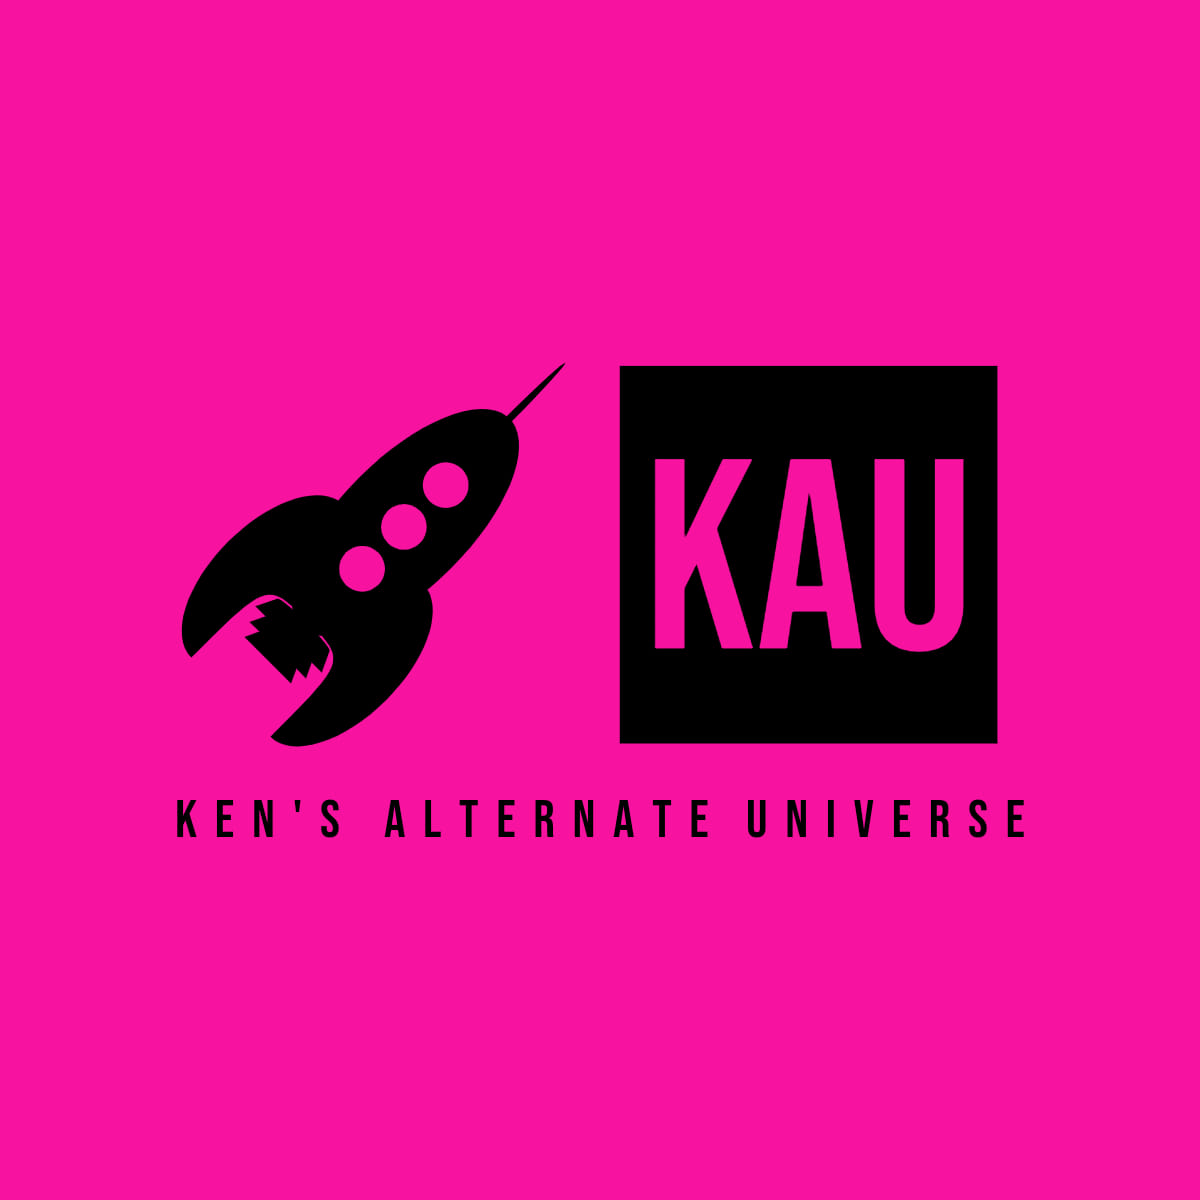 Ken's Alternate Universe!